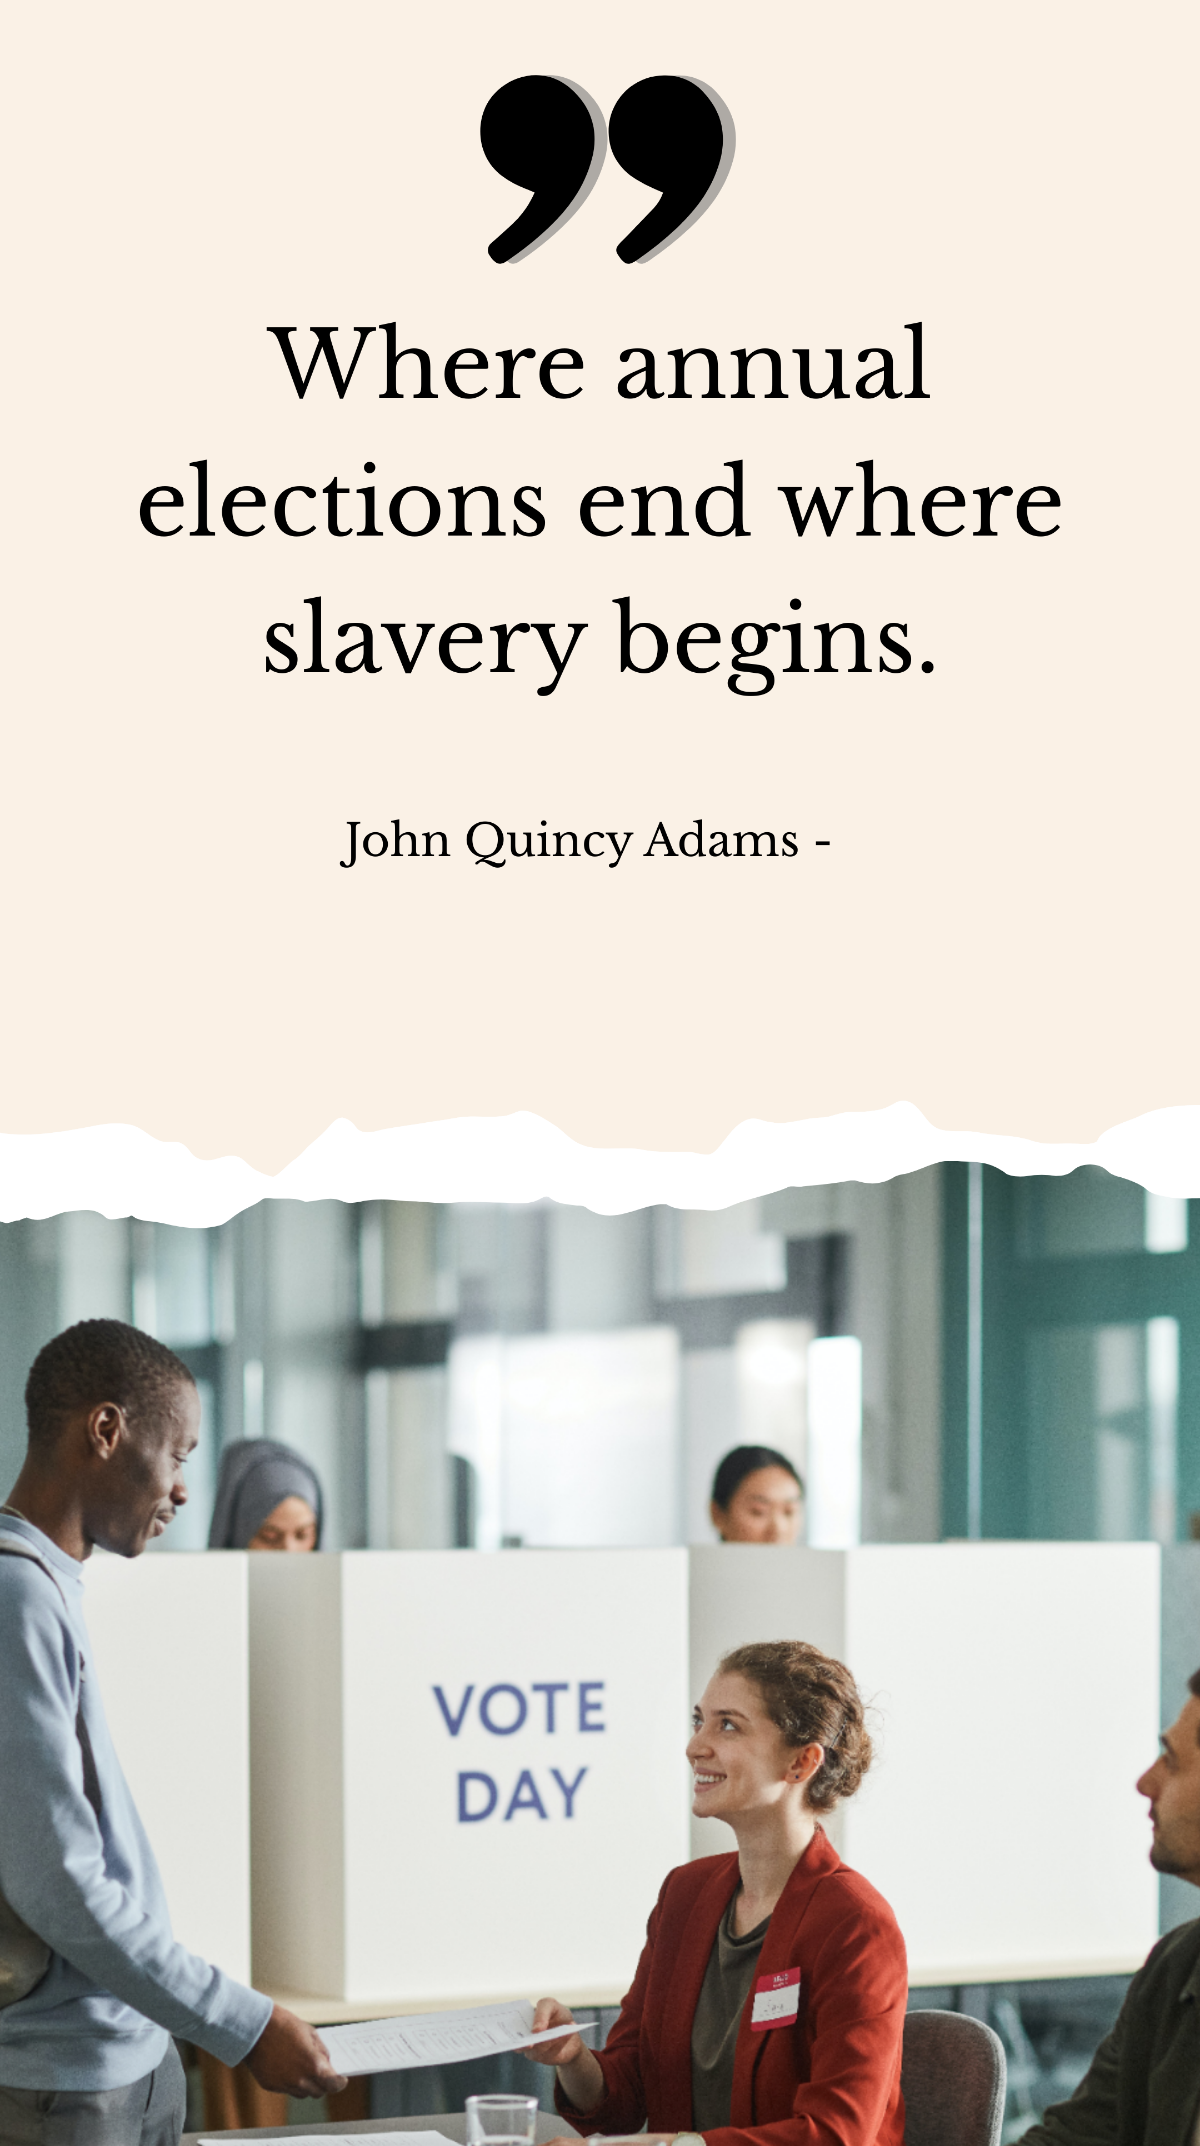 John Quincy Adams - Where annual elections end where slavery begins.